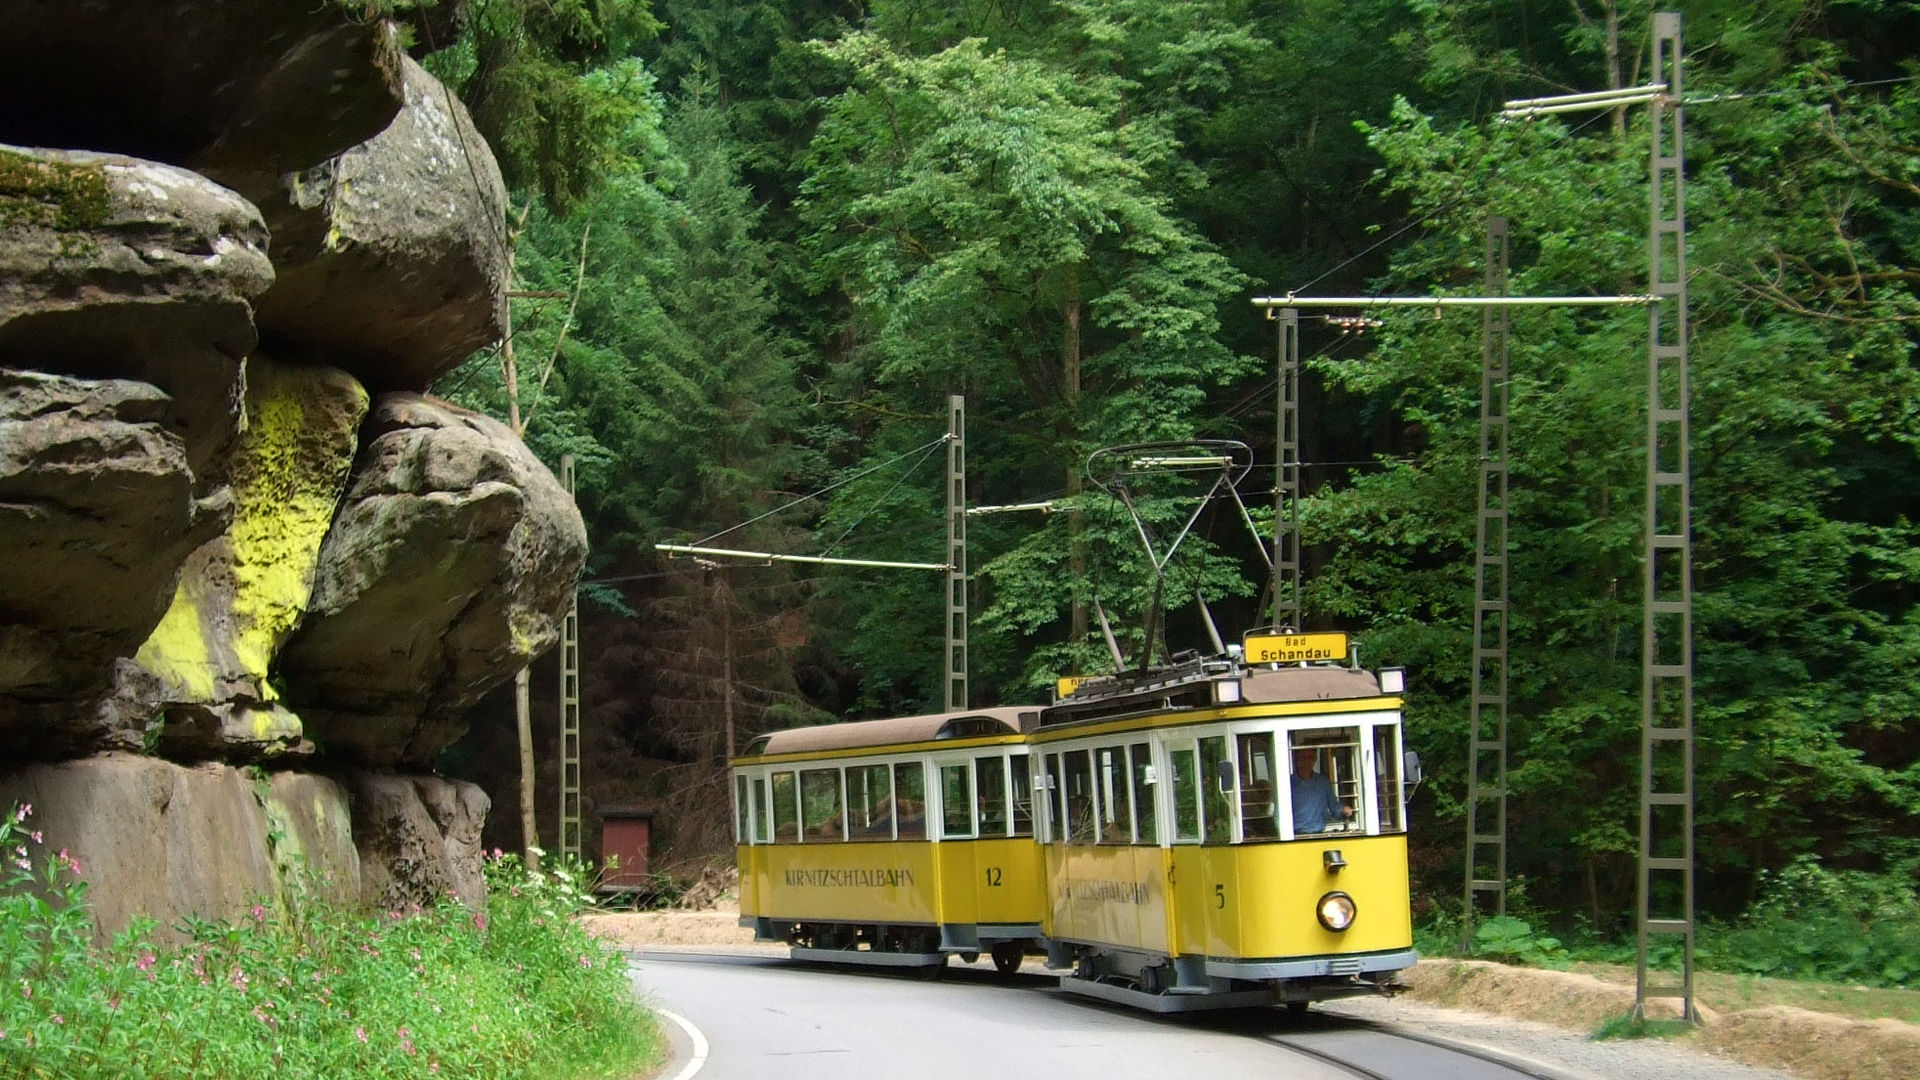 Historischer Zug der Kirnitzschtalbahn 
© OVPS - Foto S. Großer